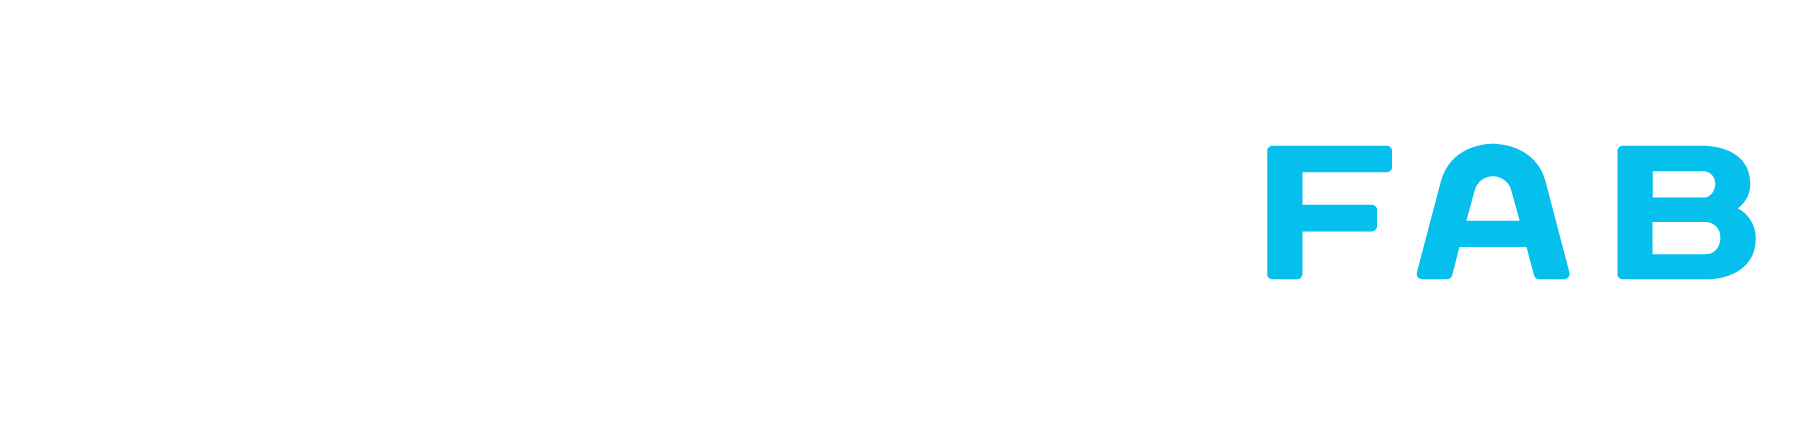 Orbit Fab logo